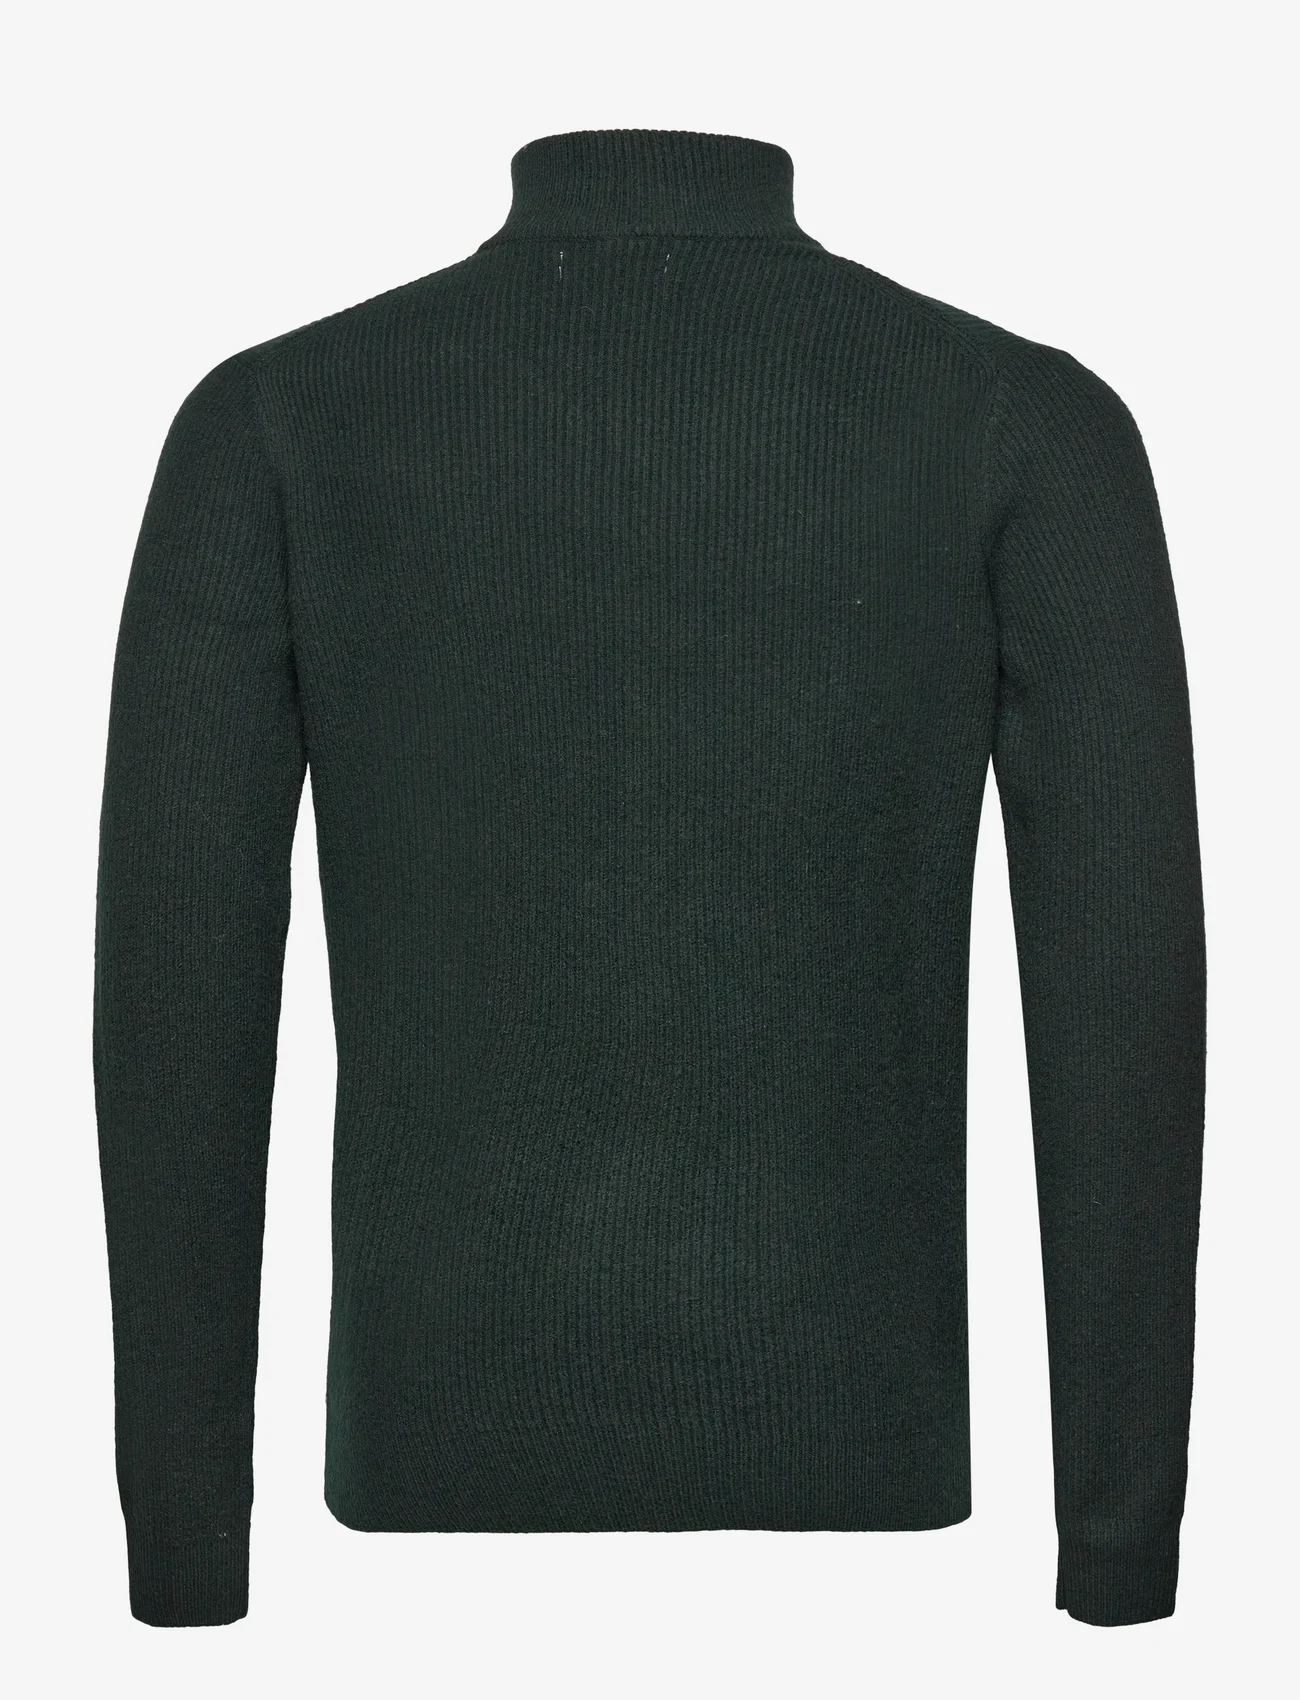 Mango - Ribbed sweater with zip - män - dark green - 1